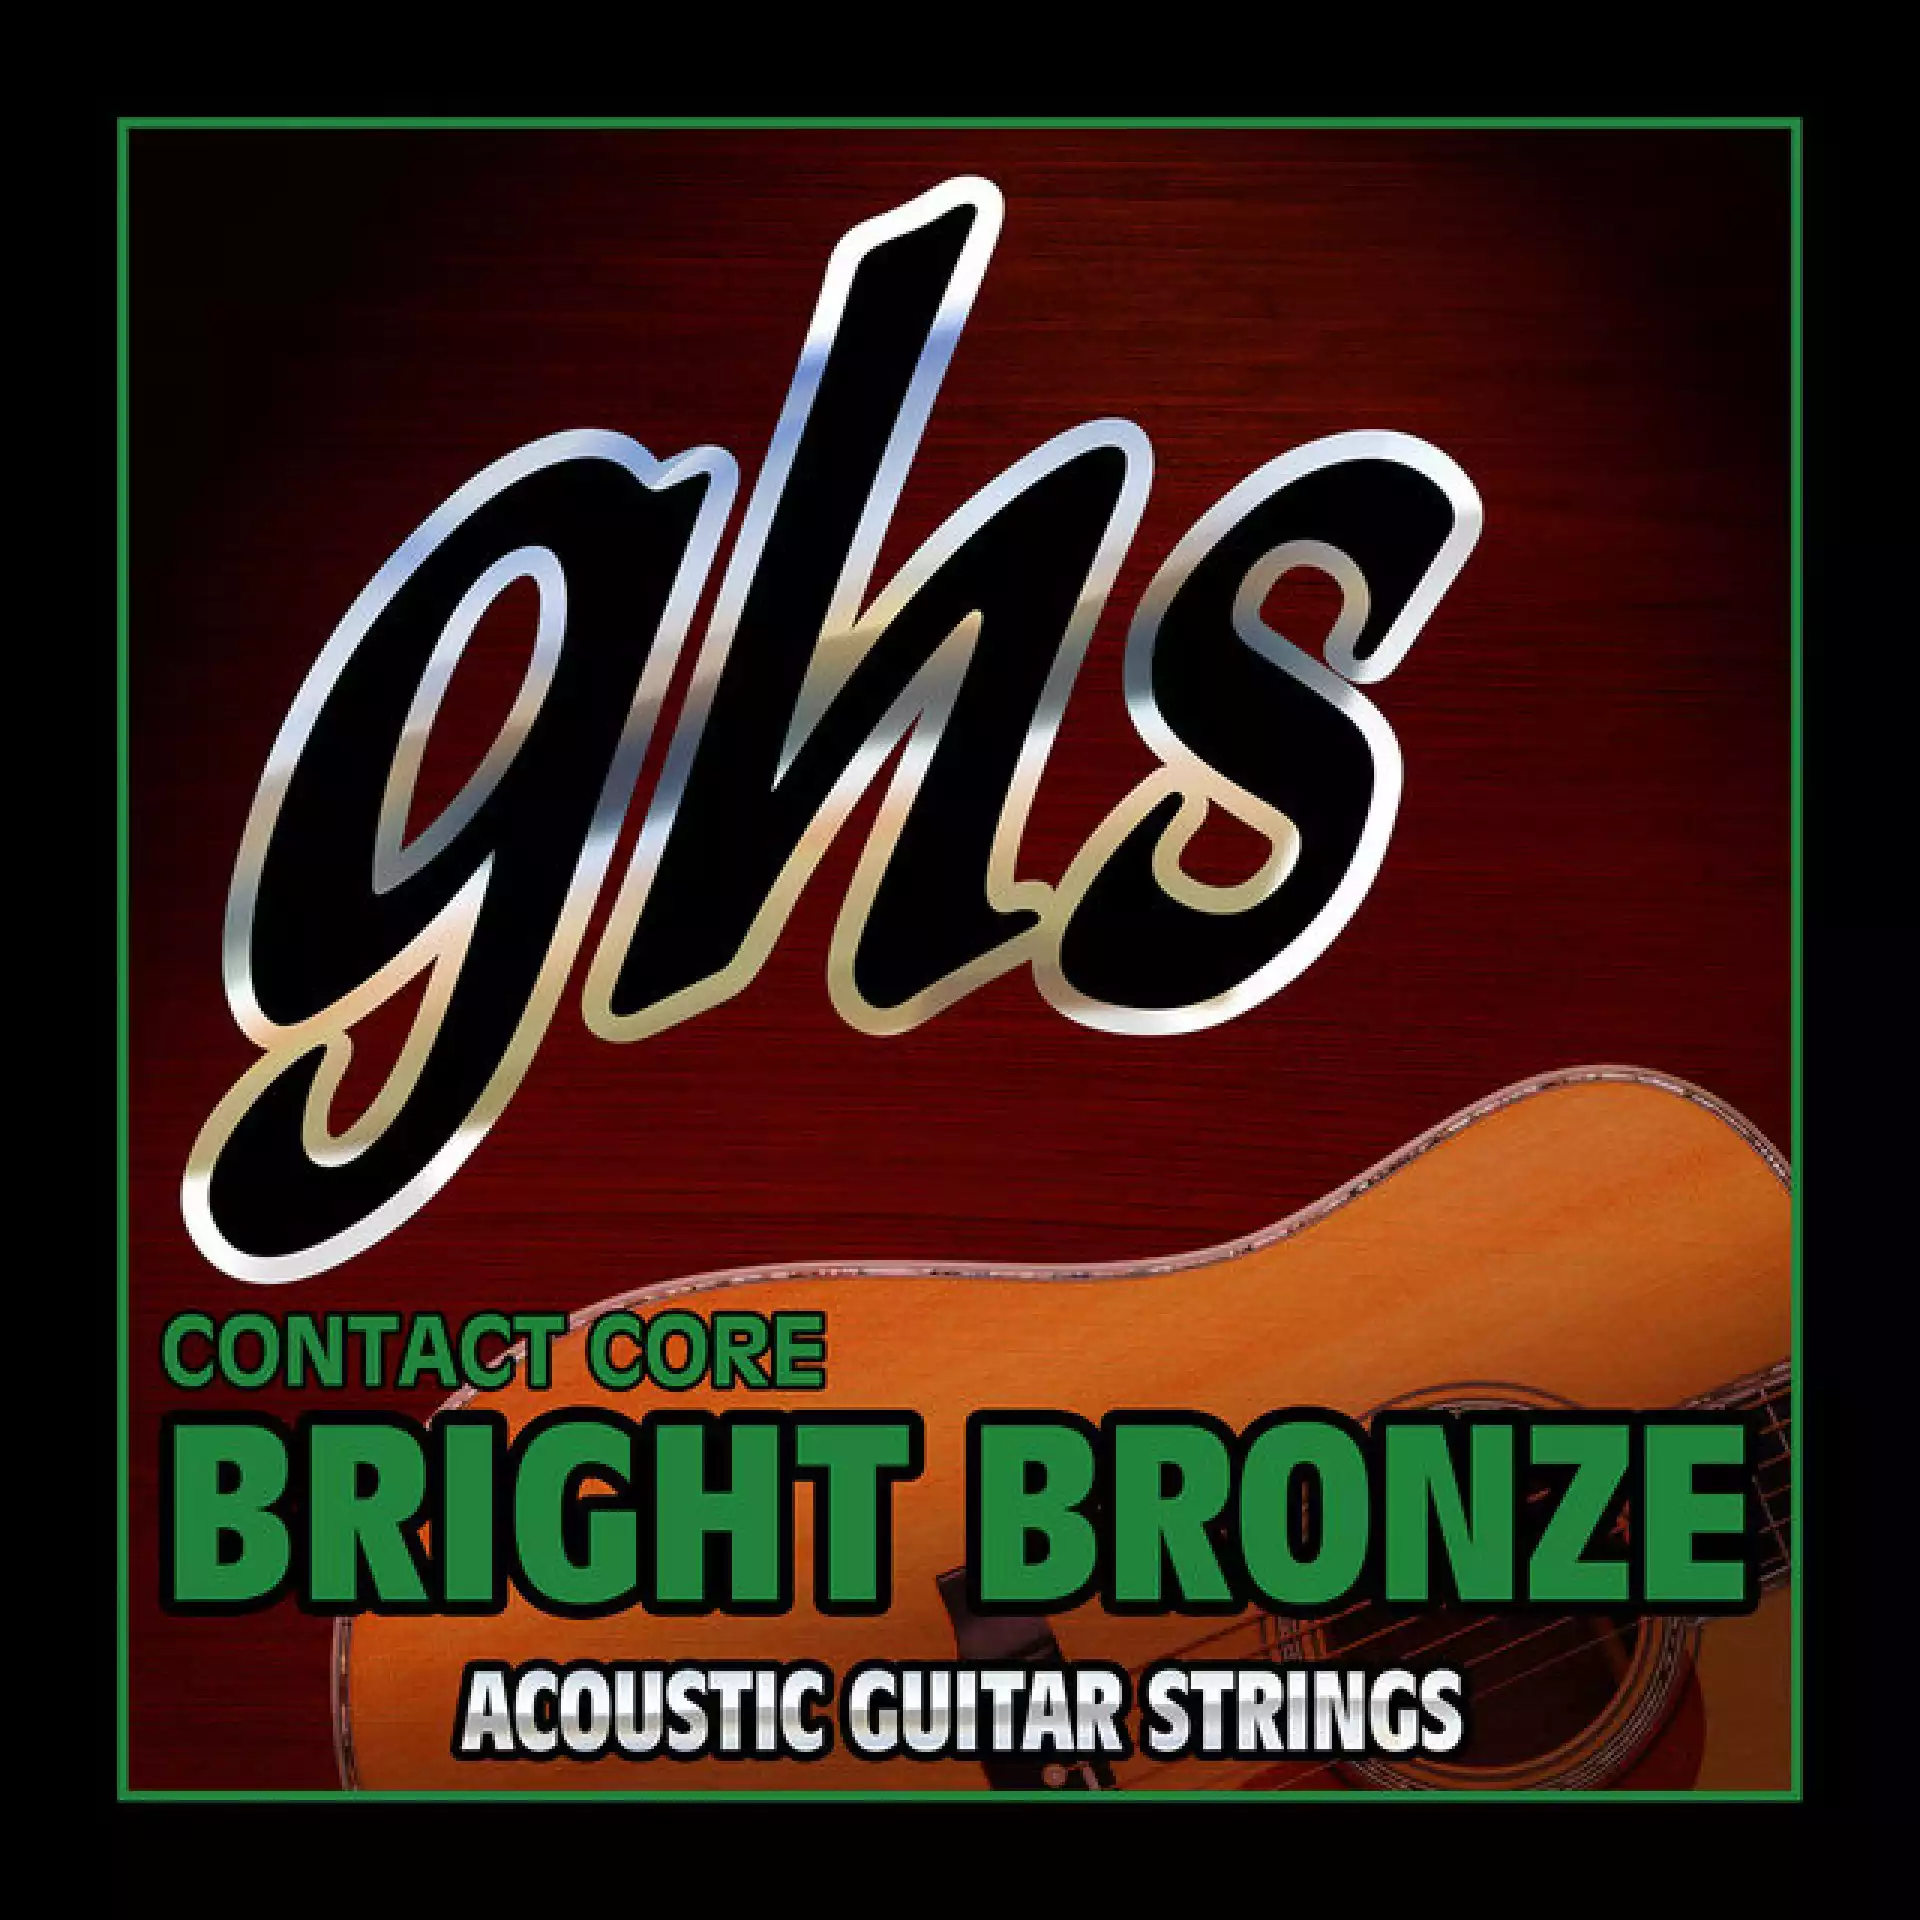 GHS CCBB30 CONTACT CORE BRIGHT BRONZE - Light